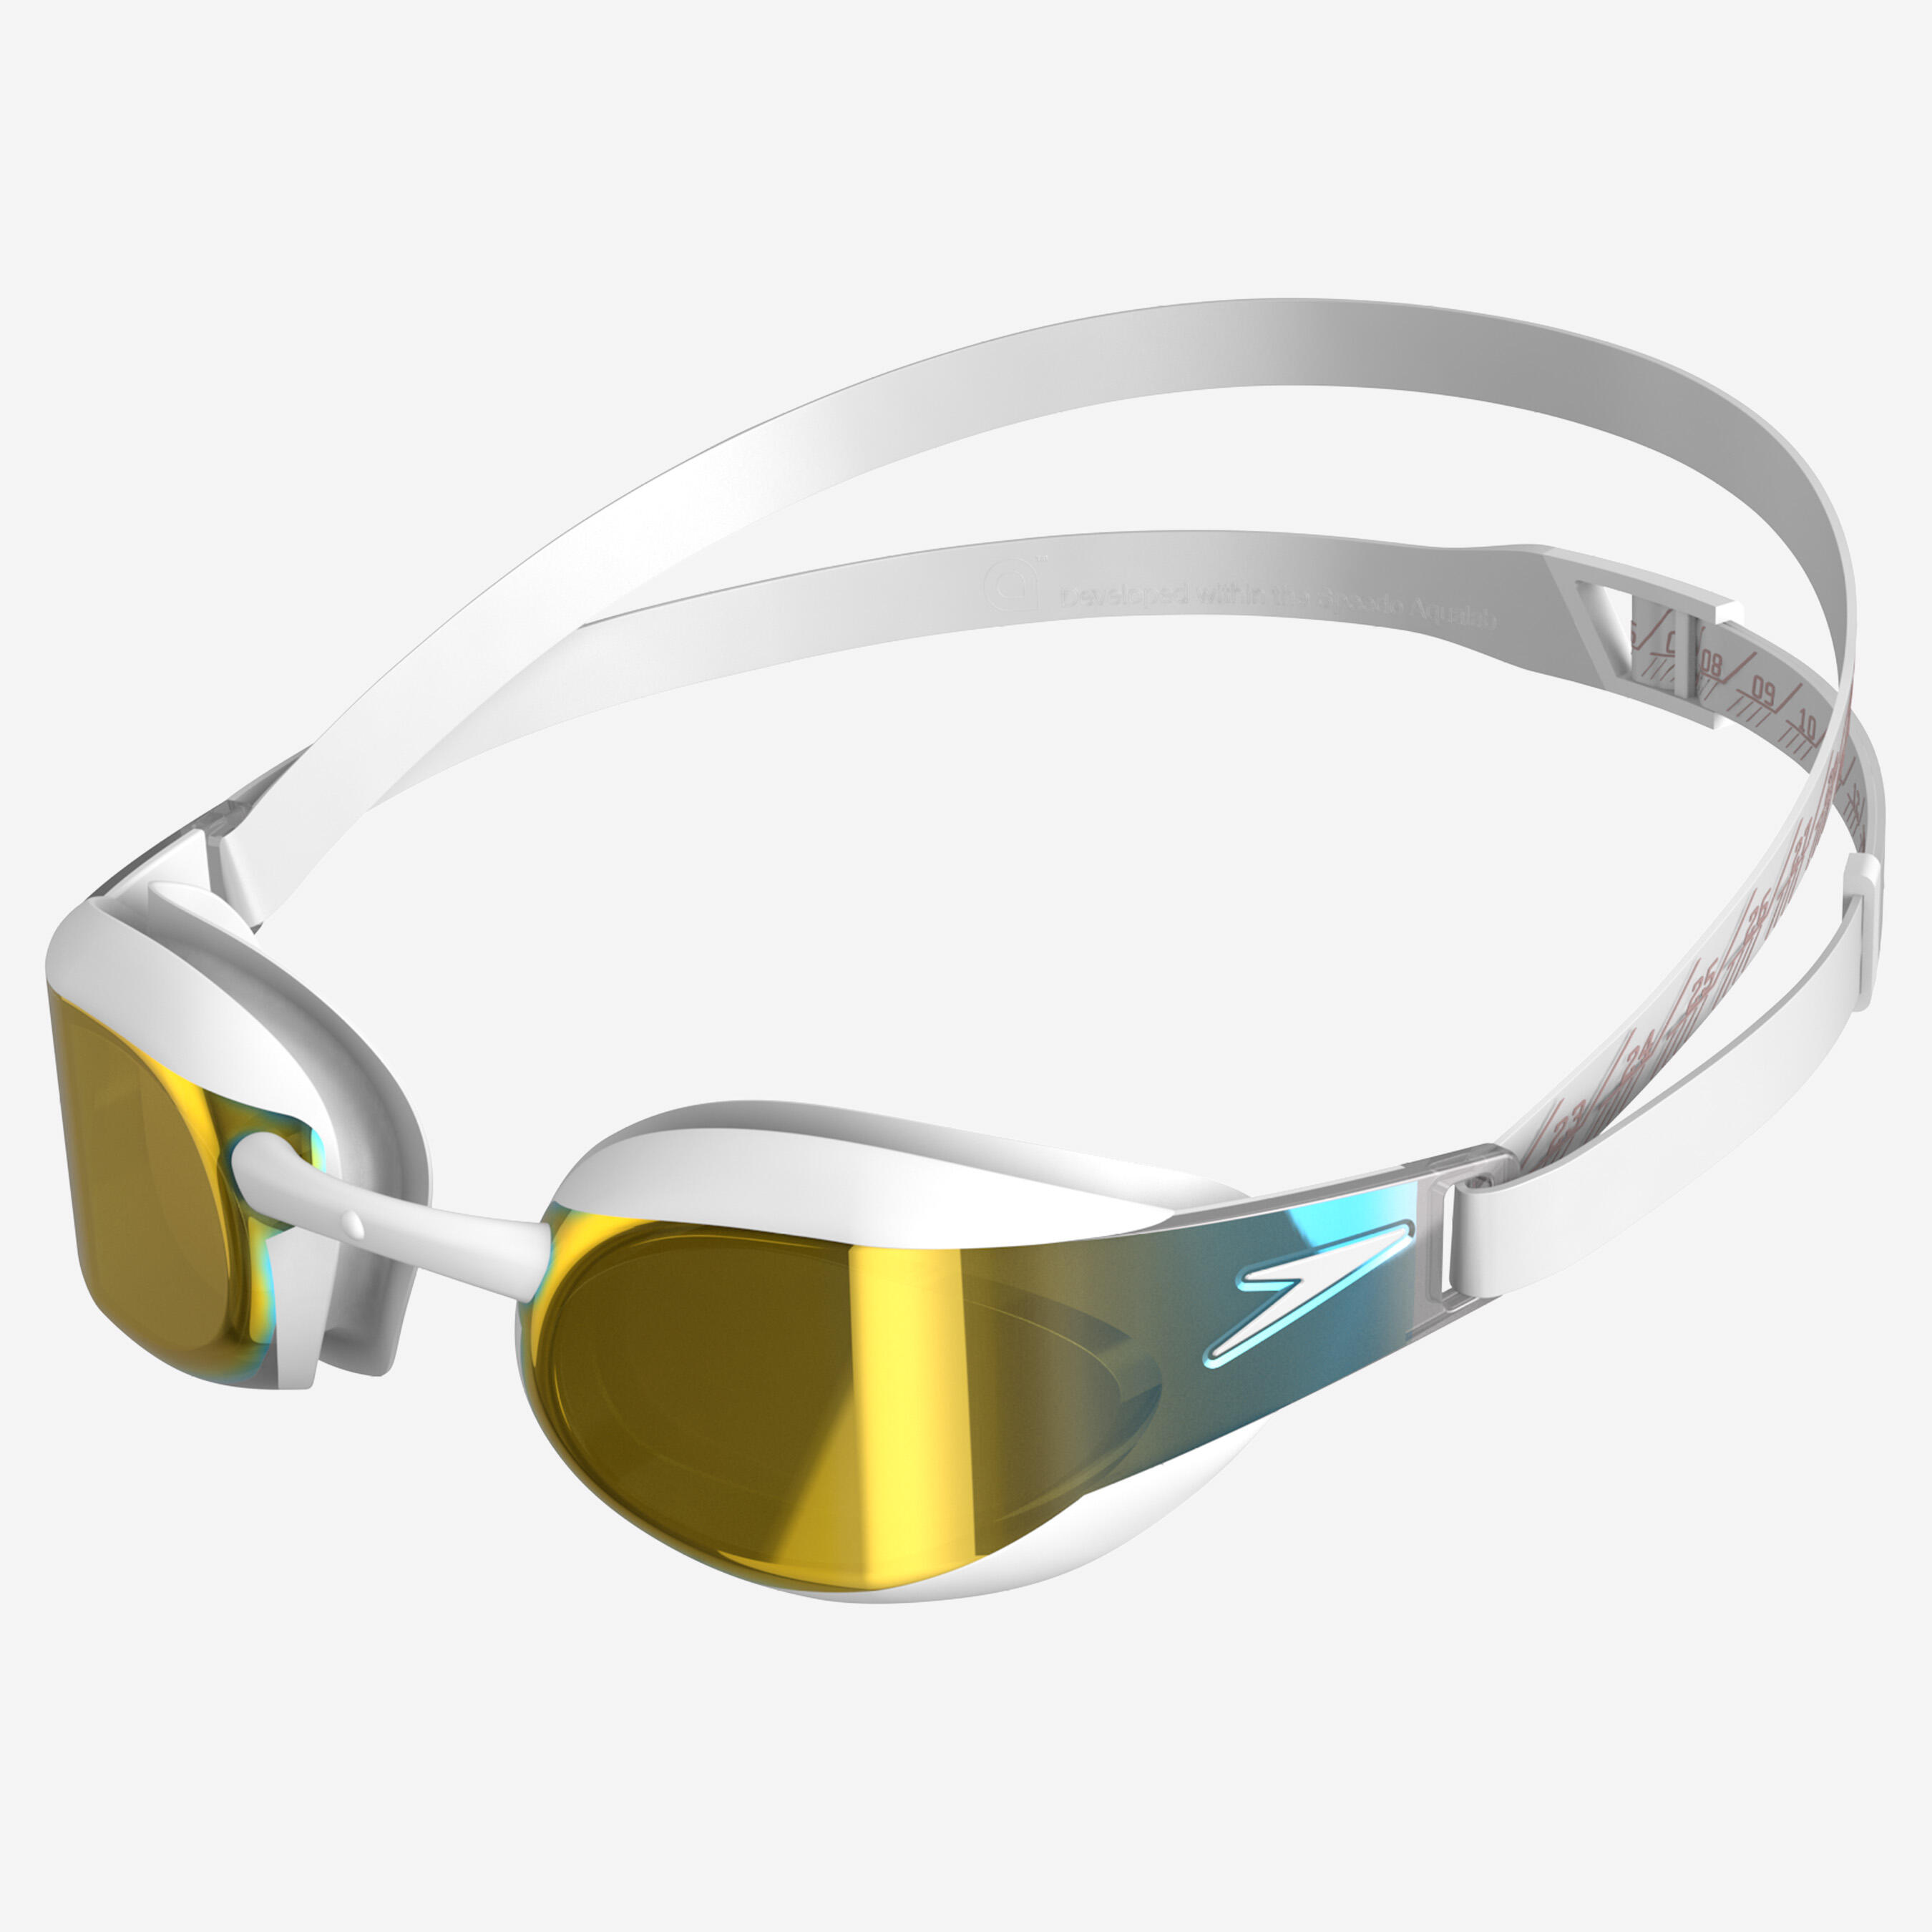 SPEEDO SPEEDO FASTSKIN white swimming goggles with gold mirror lenses